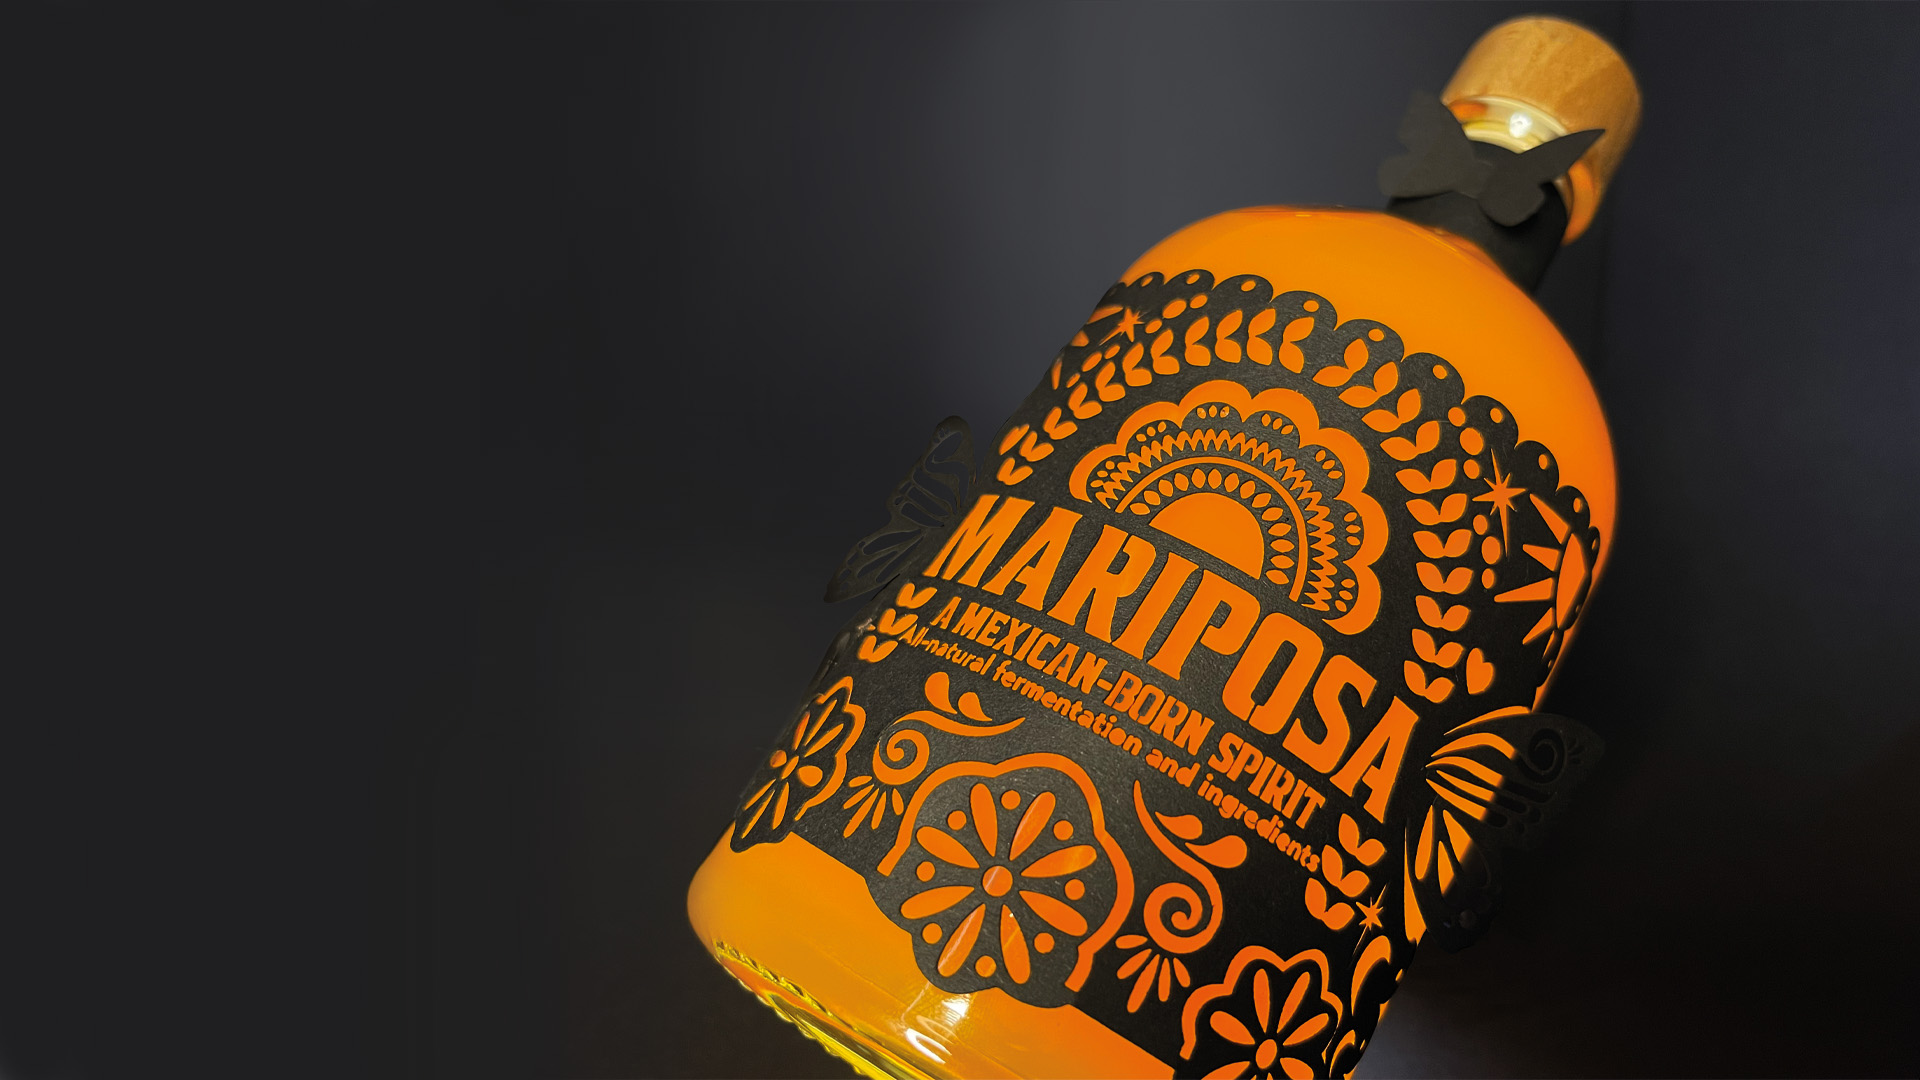 Packaging Design by Abigail Ballard-Lawrence showing orange patterned bottle label design for Mariposa on bottle.